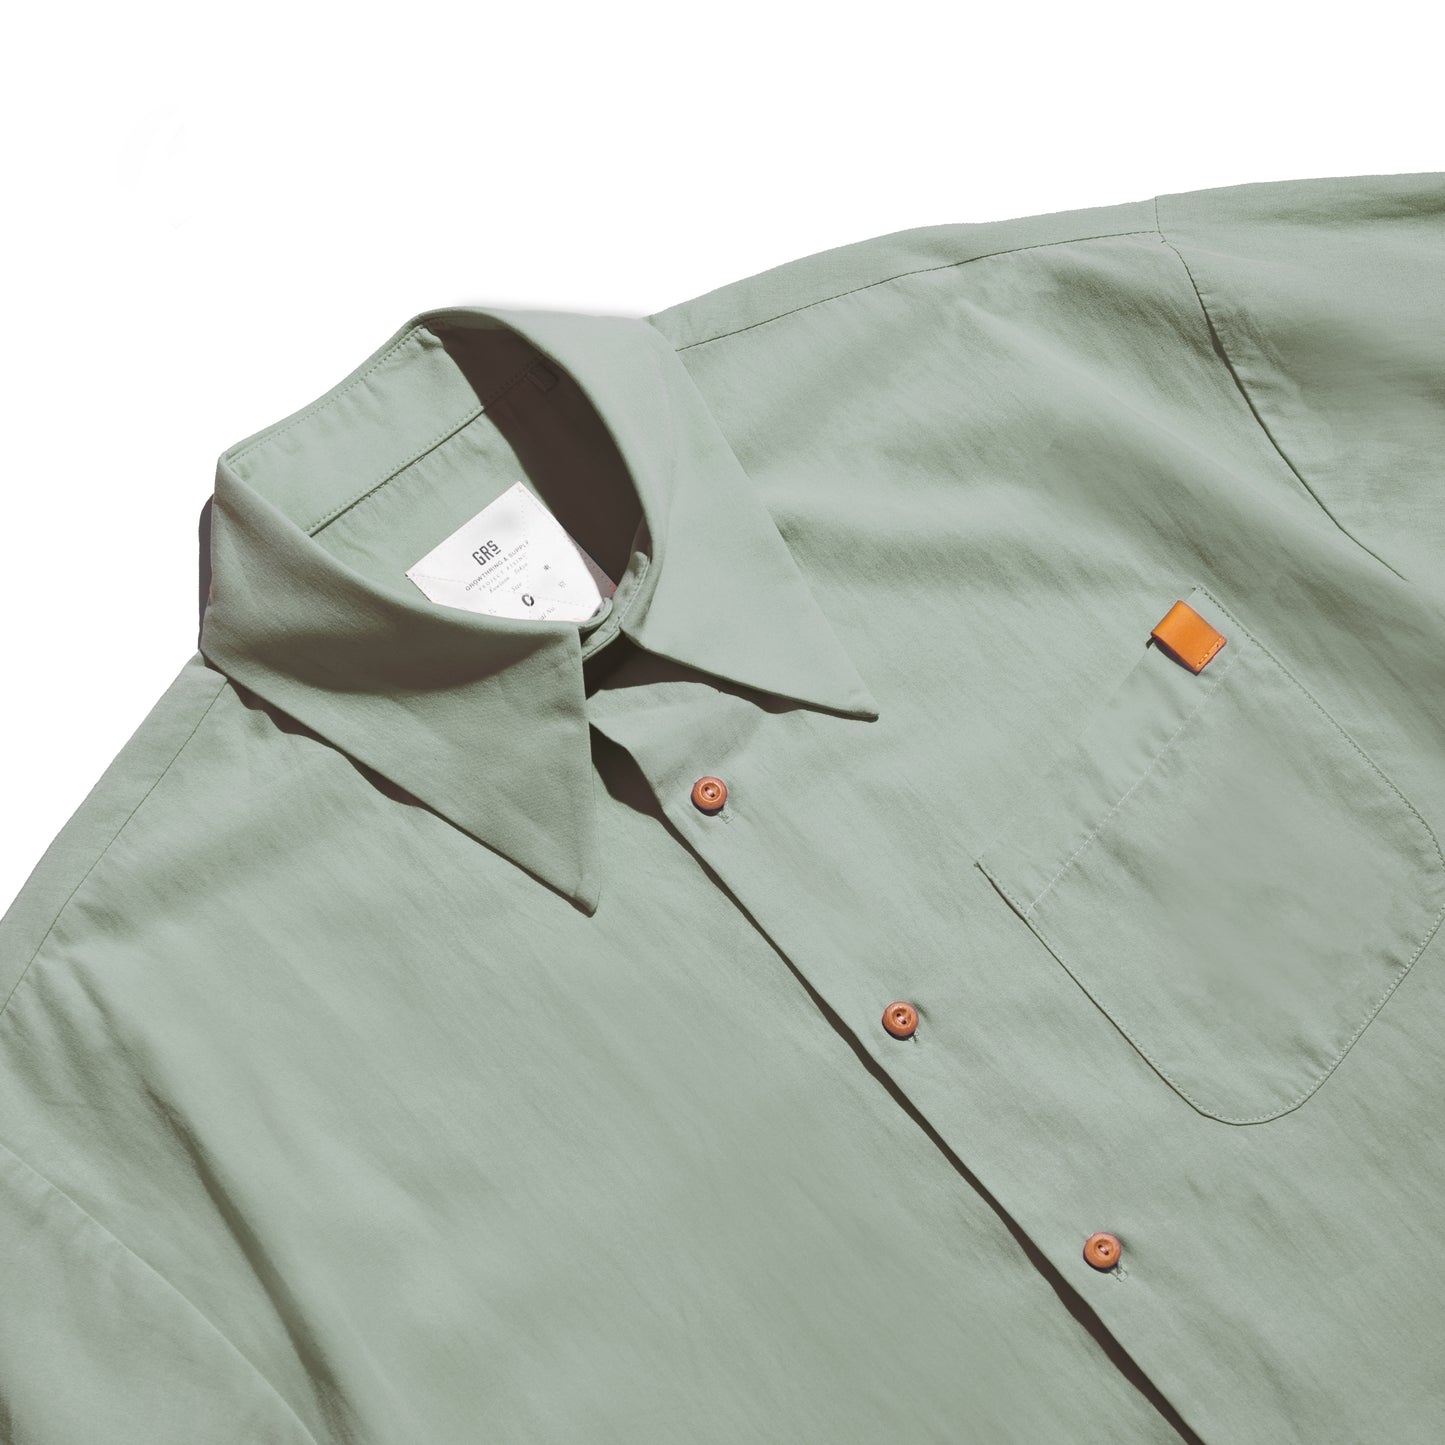 Faded Color S/S Pocket Big Shirt / Sage Green